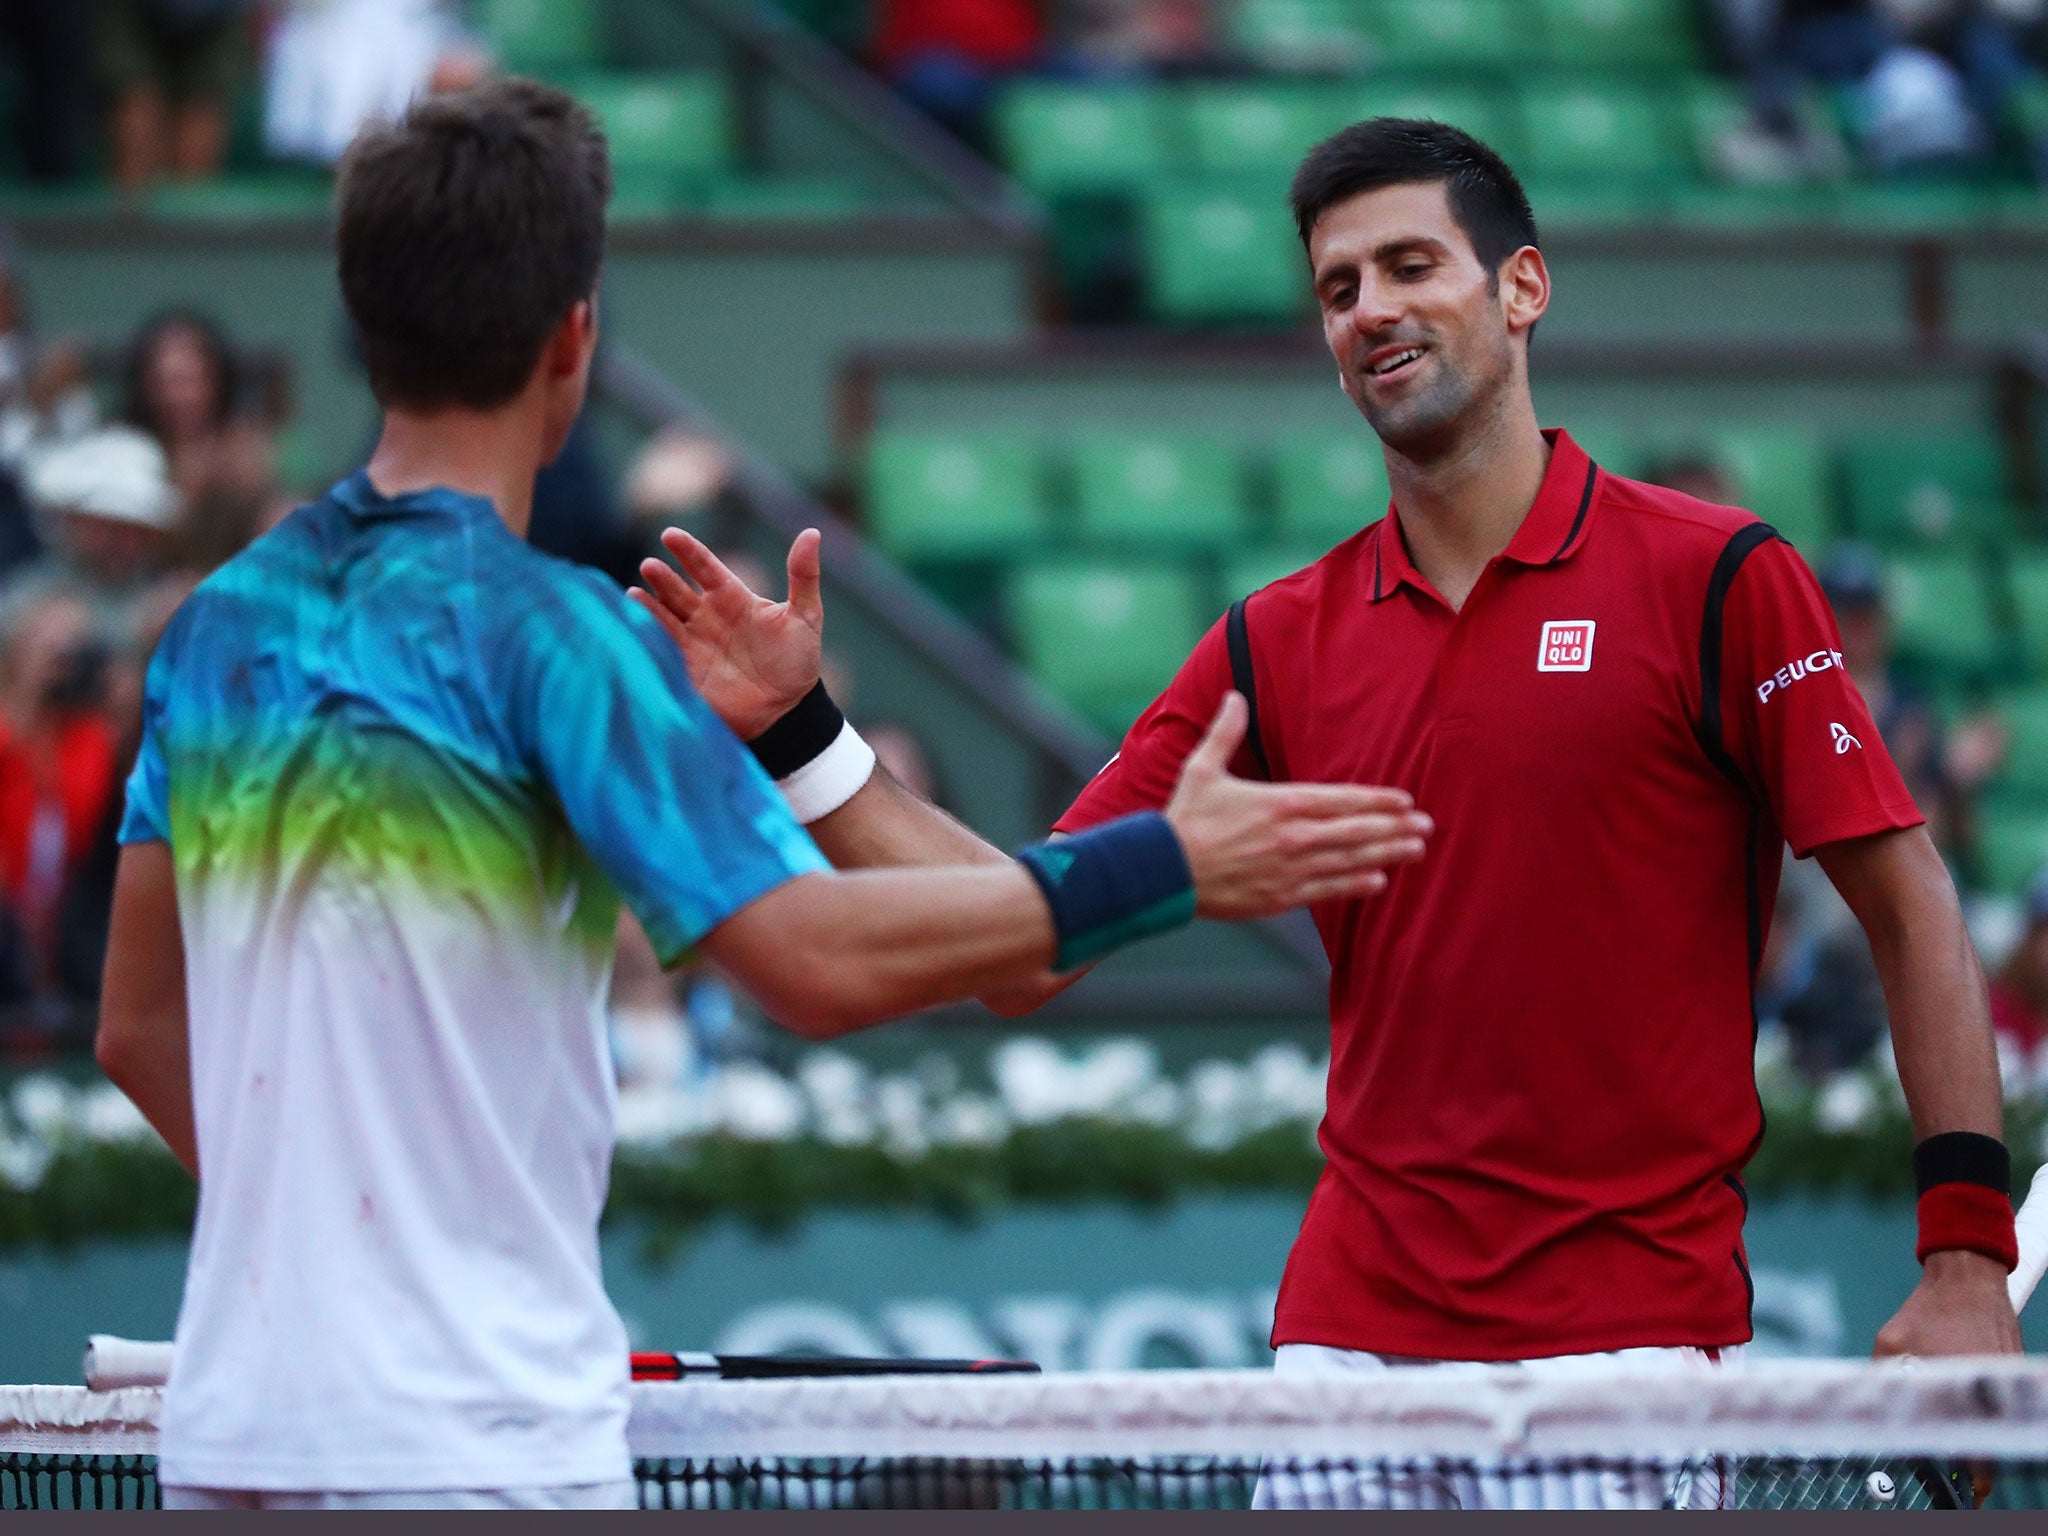 Novak Djokovic shakes hands with Aljaz Bedene following the world No 1's third round victory